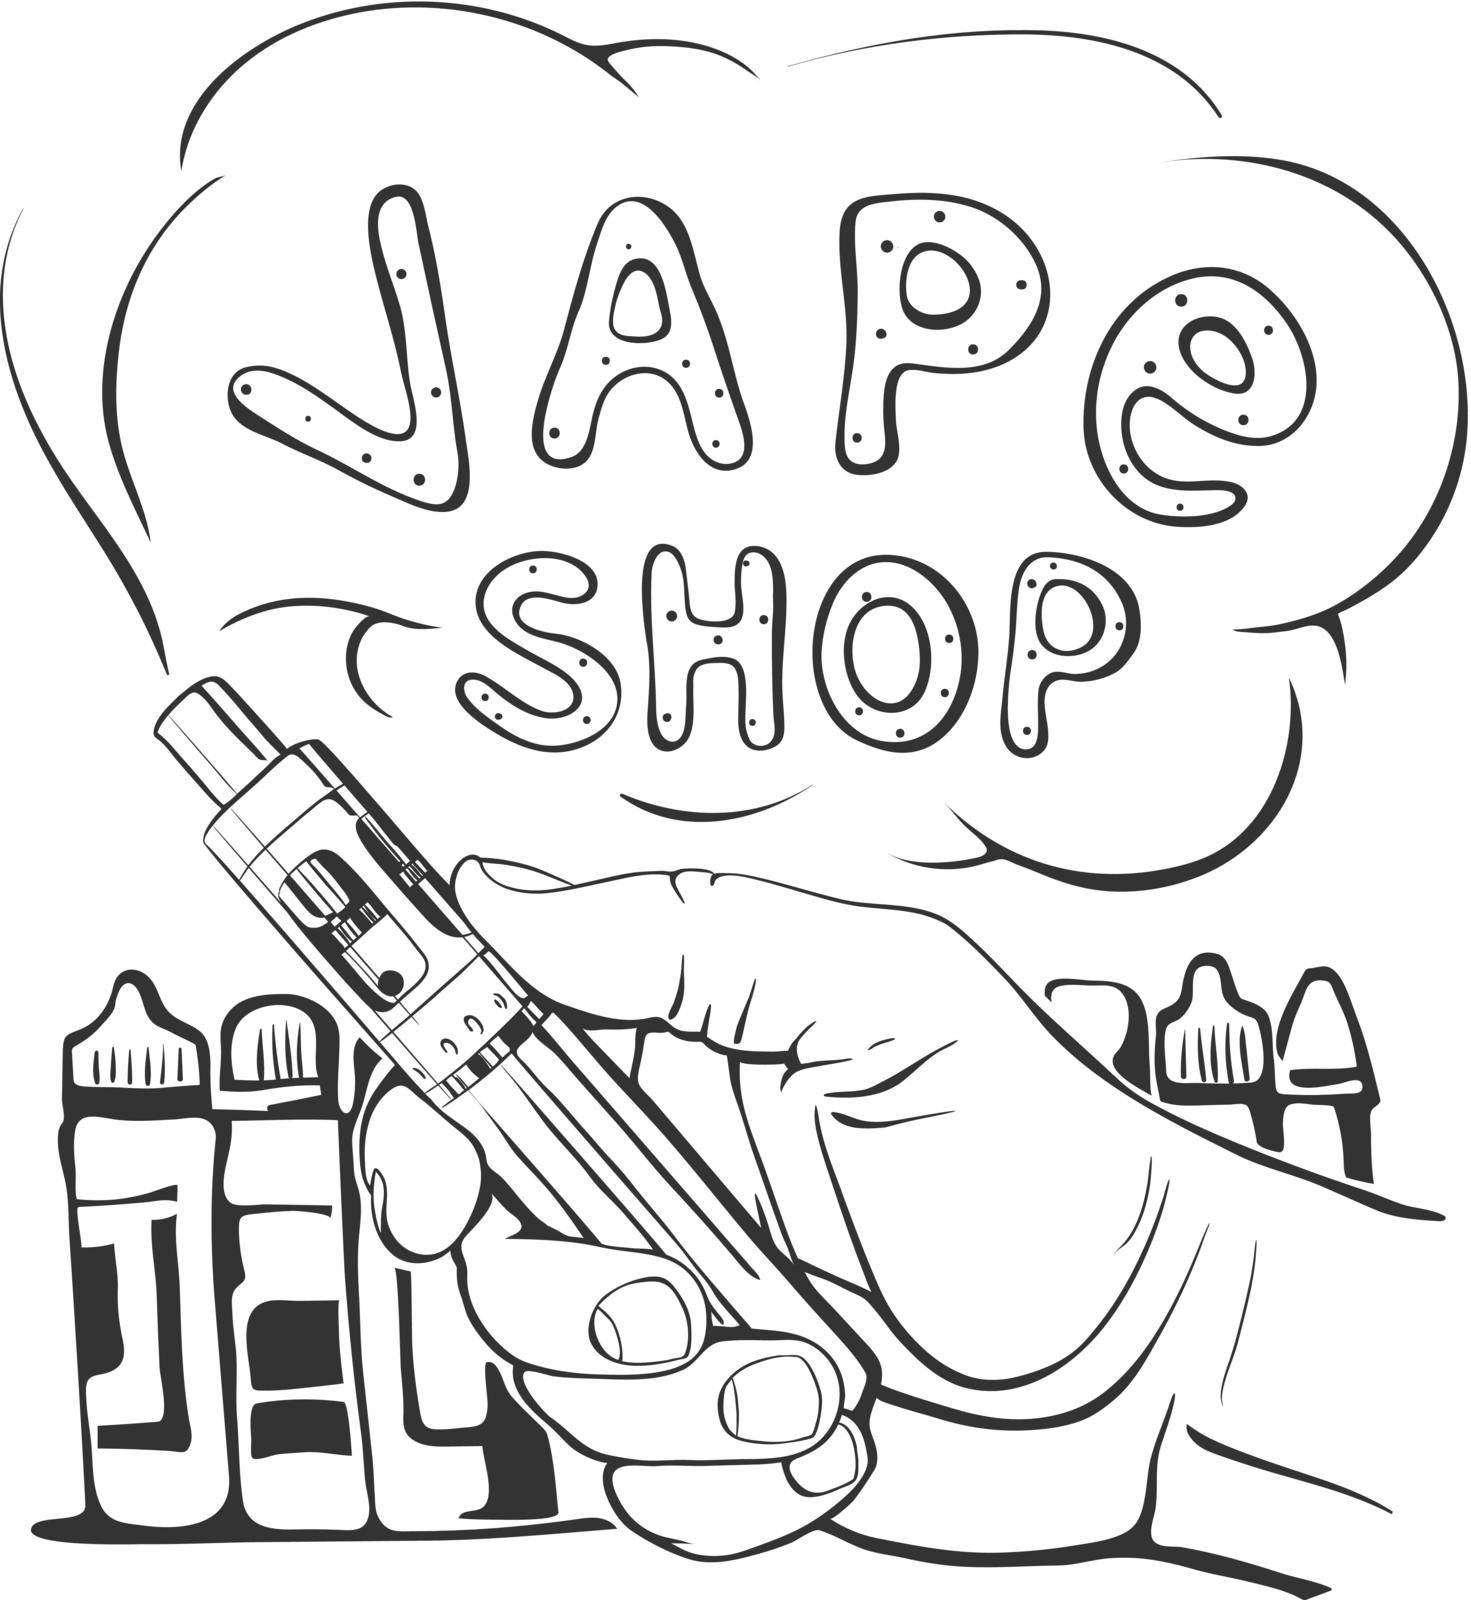 Vape Shop logo on a white background by roman79